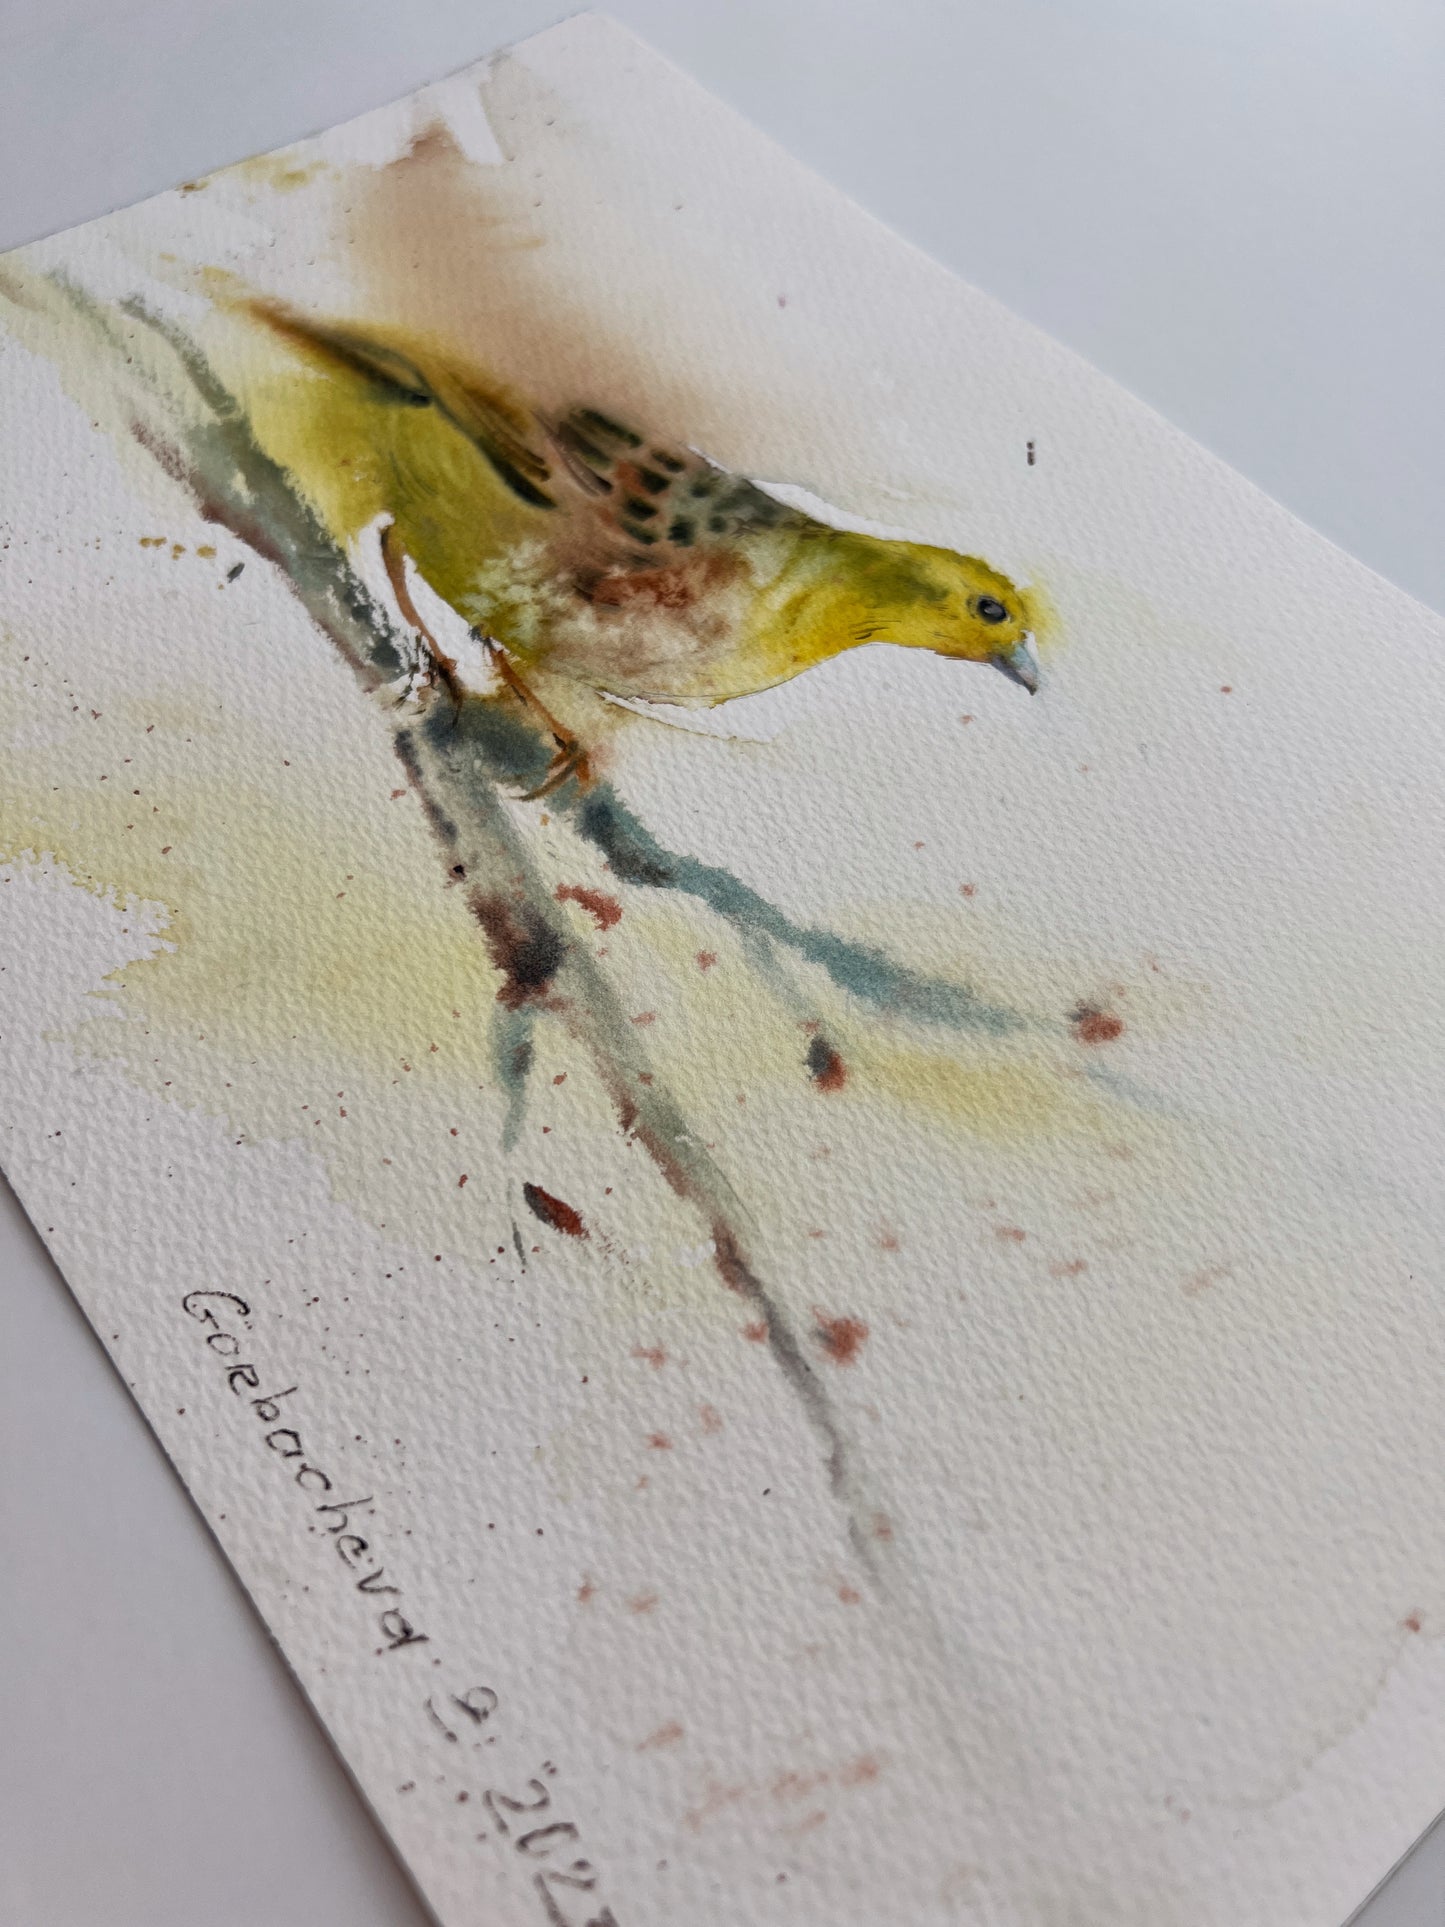 Yellow Bird Art, Original Watercolor Painting of a Tropical Bird, Perfect Art for Home Decor, Unique Home Decor Gift